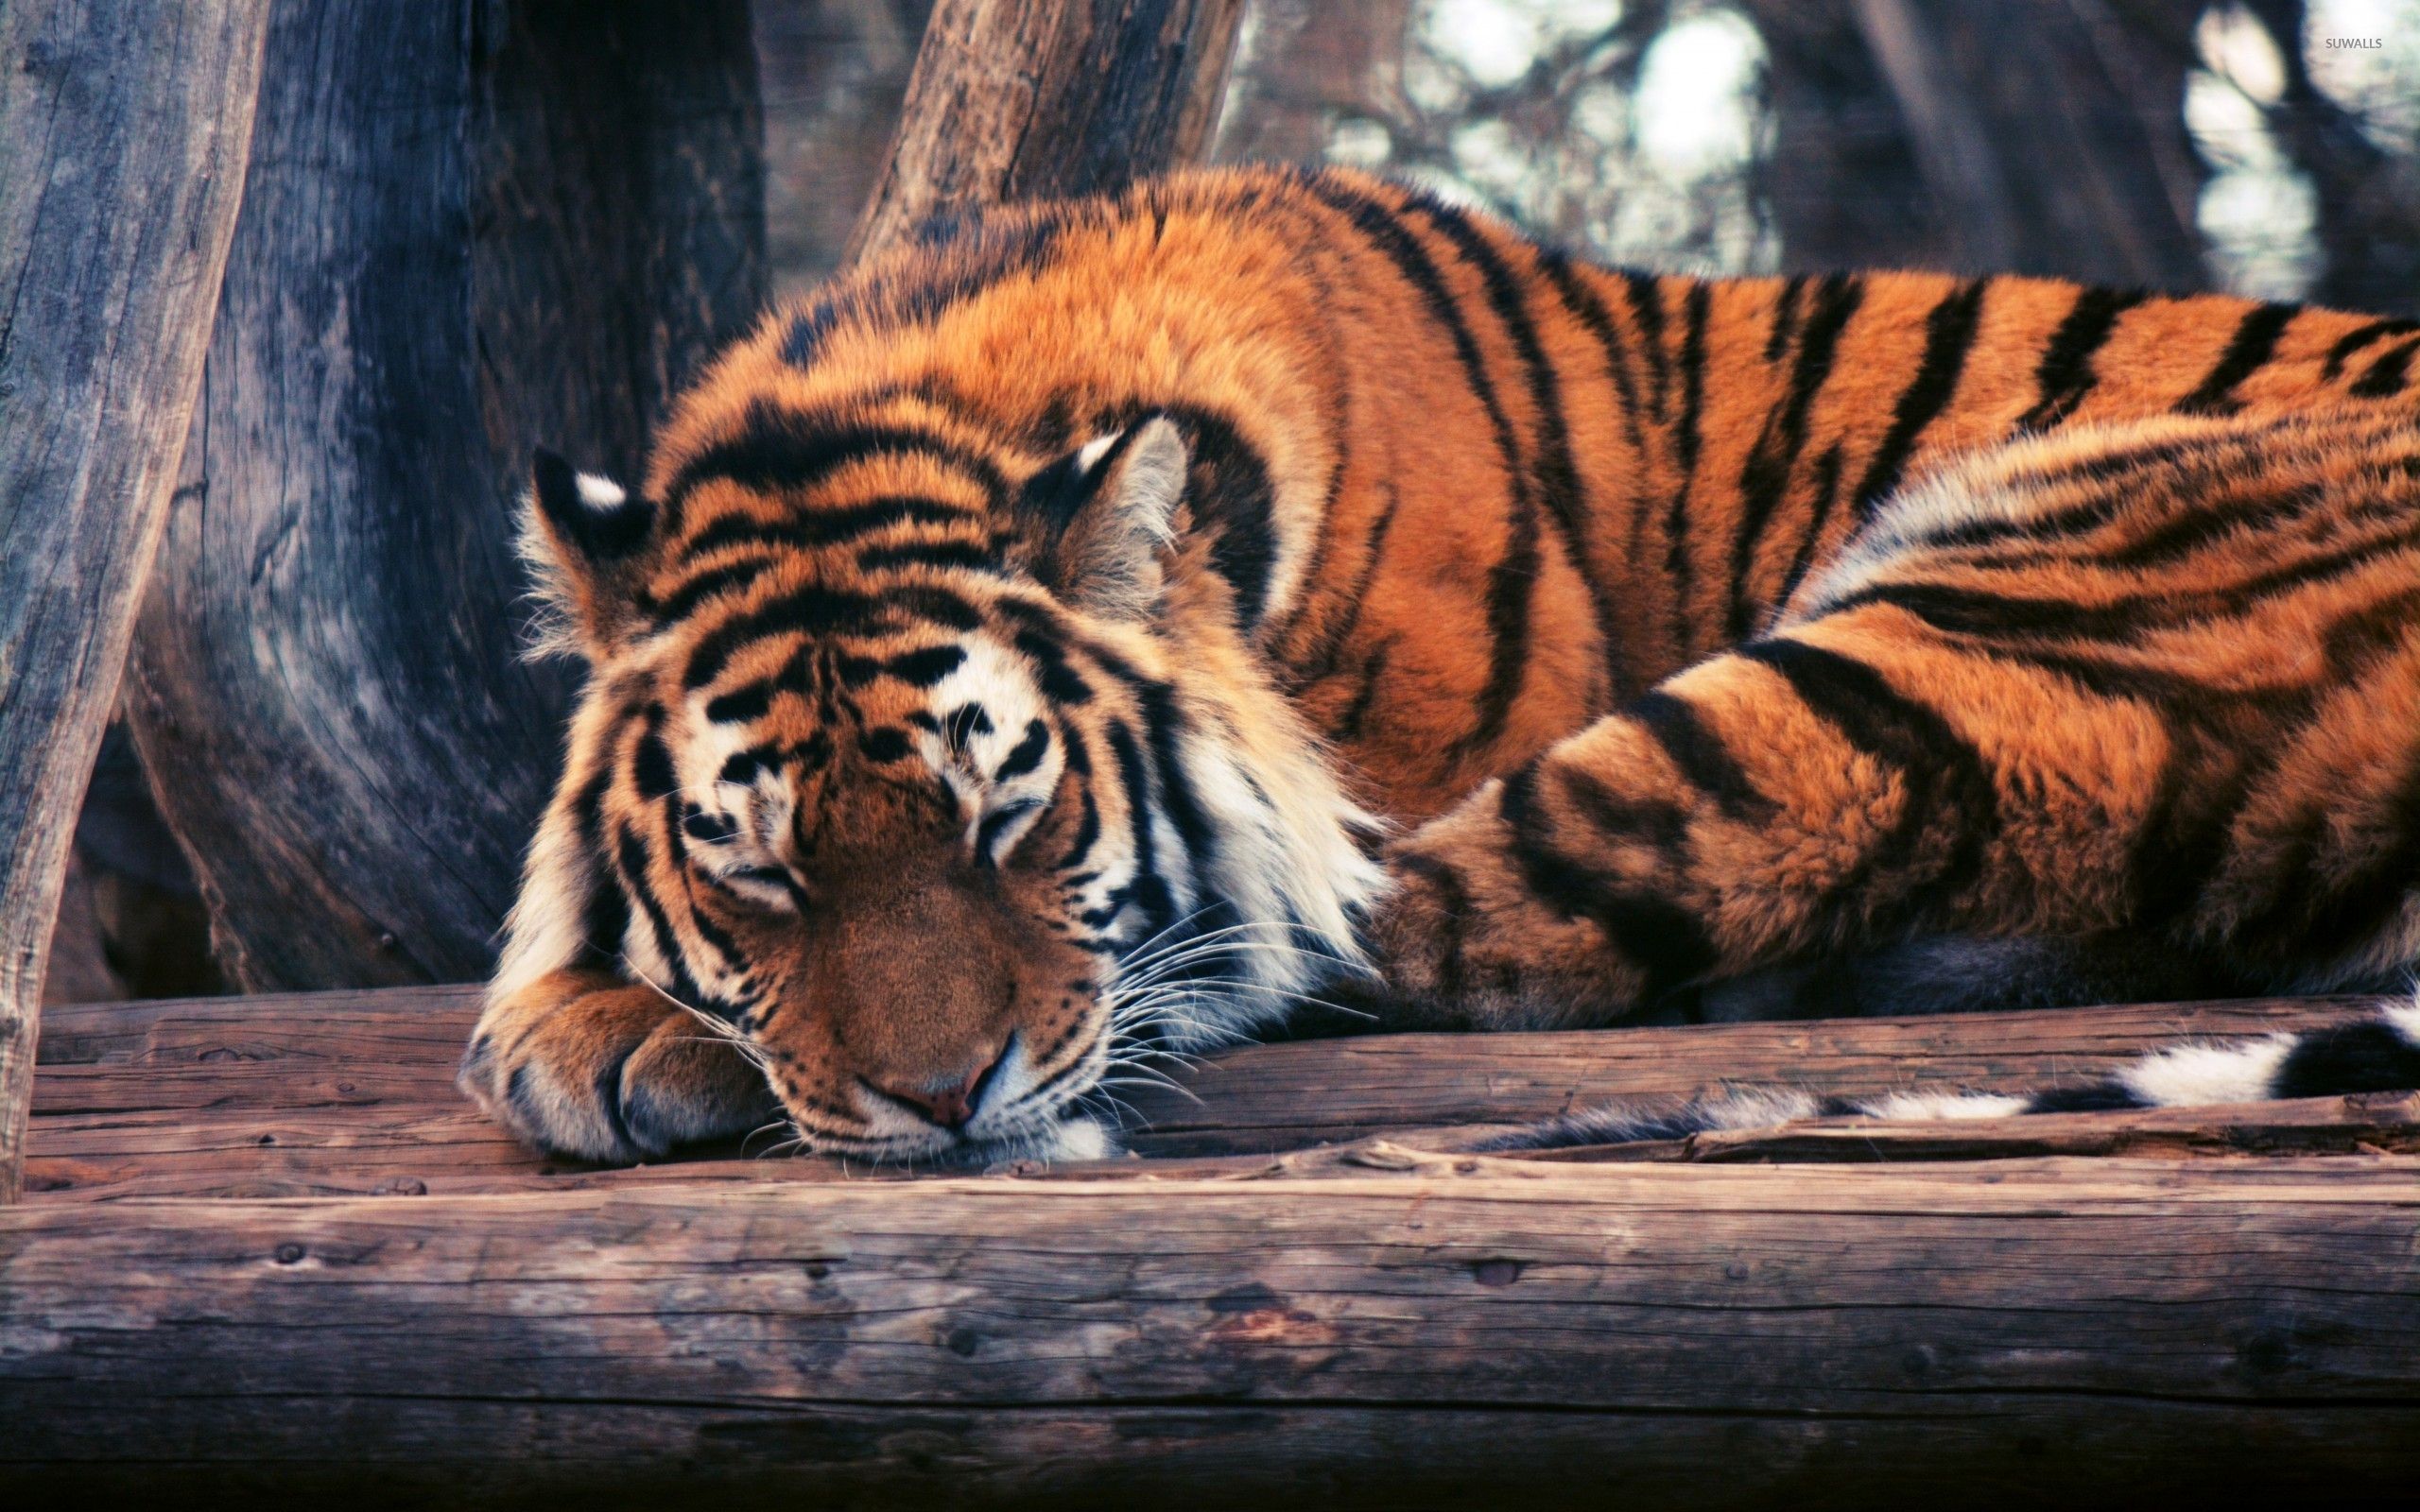 Tiger sleeping on logs wallpaper wallpaper